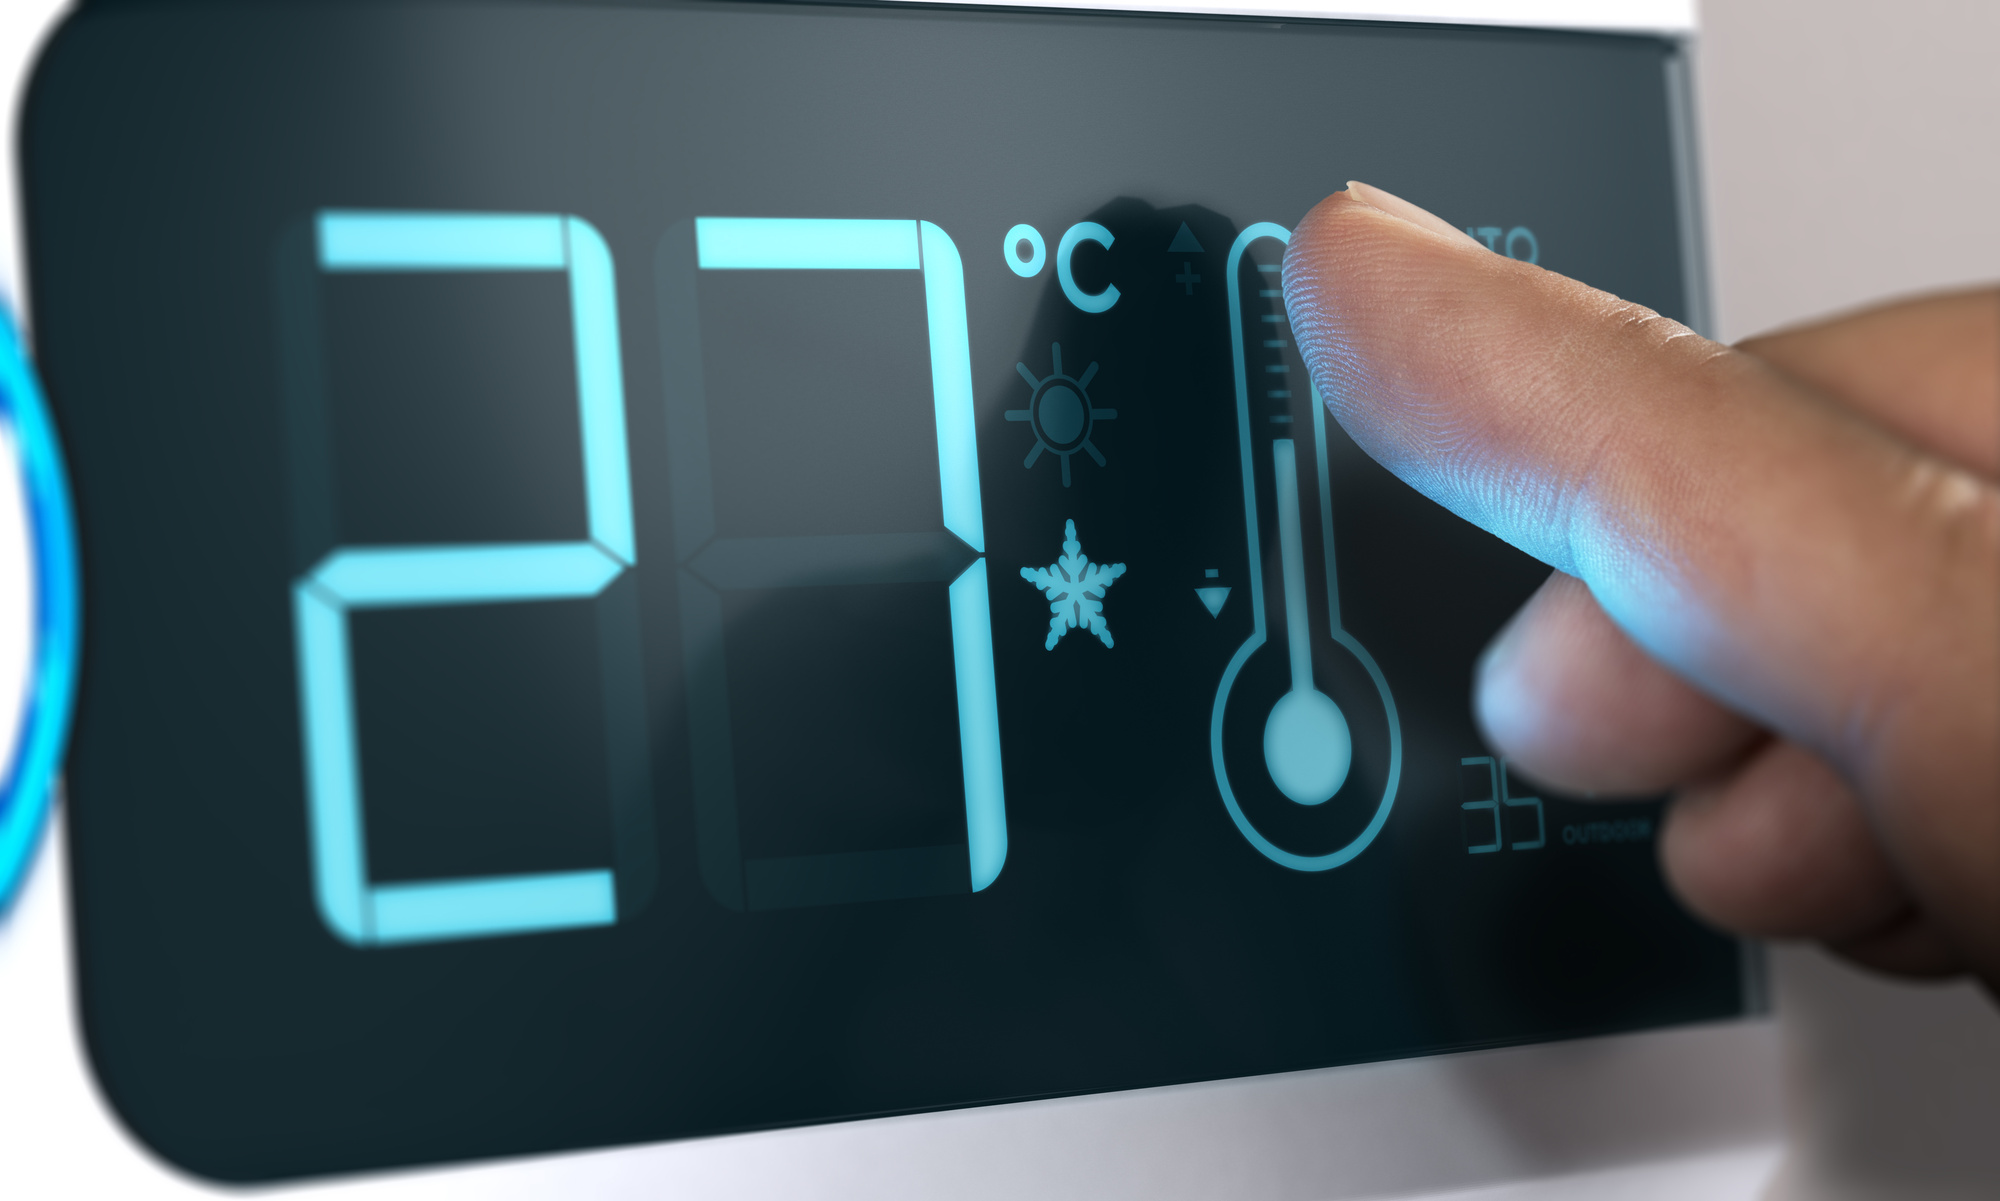 cloud based temperature monitoring